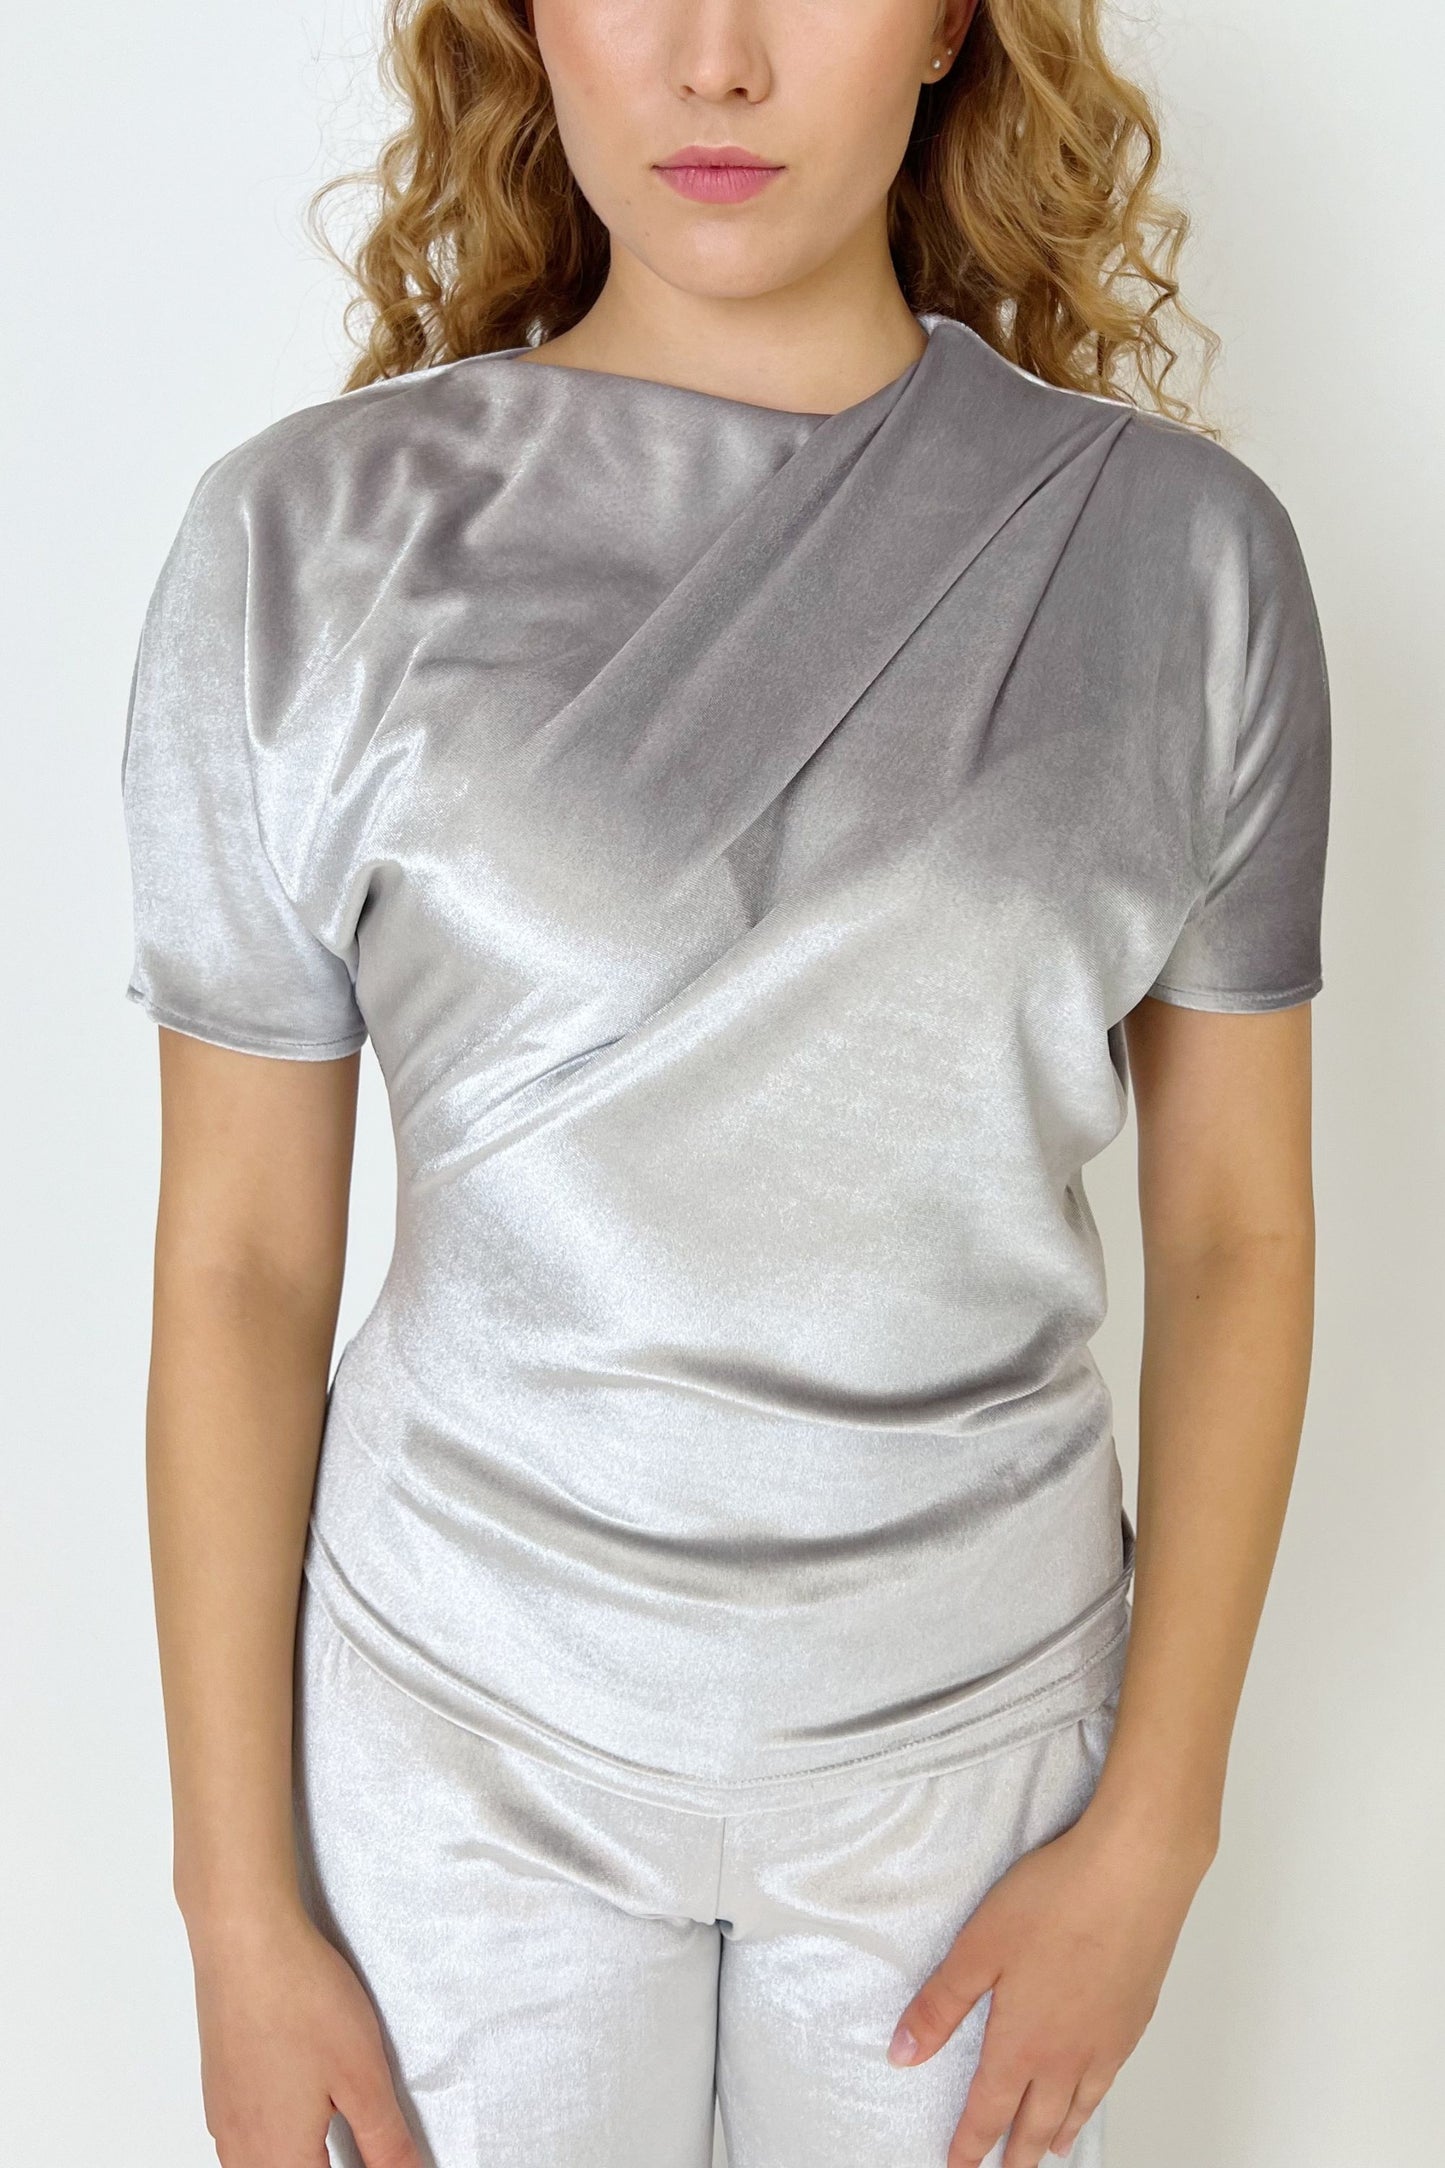 Asymmetric top in silver gray color